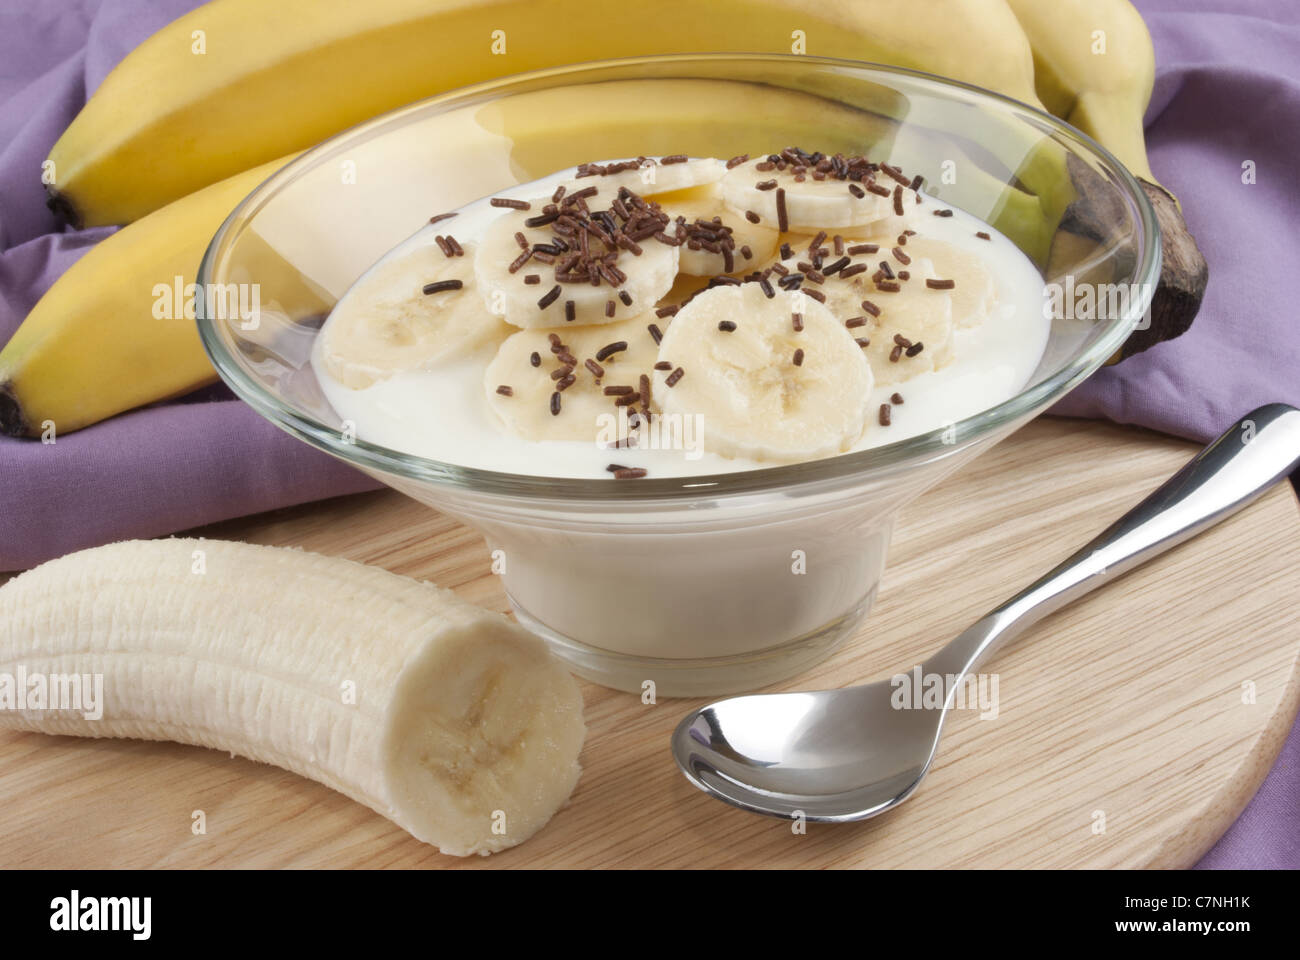 banana slices with fresh yogurt and chocolate sprinkles Stock Photo